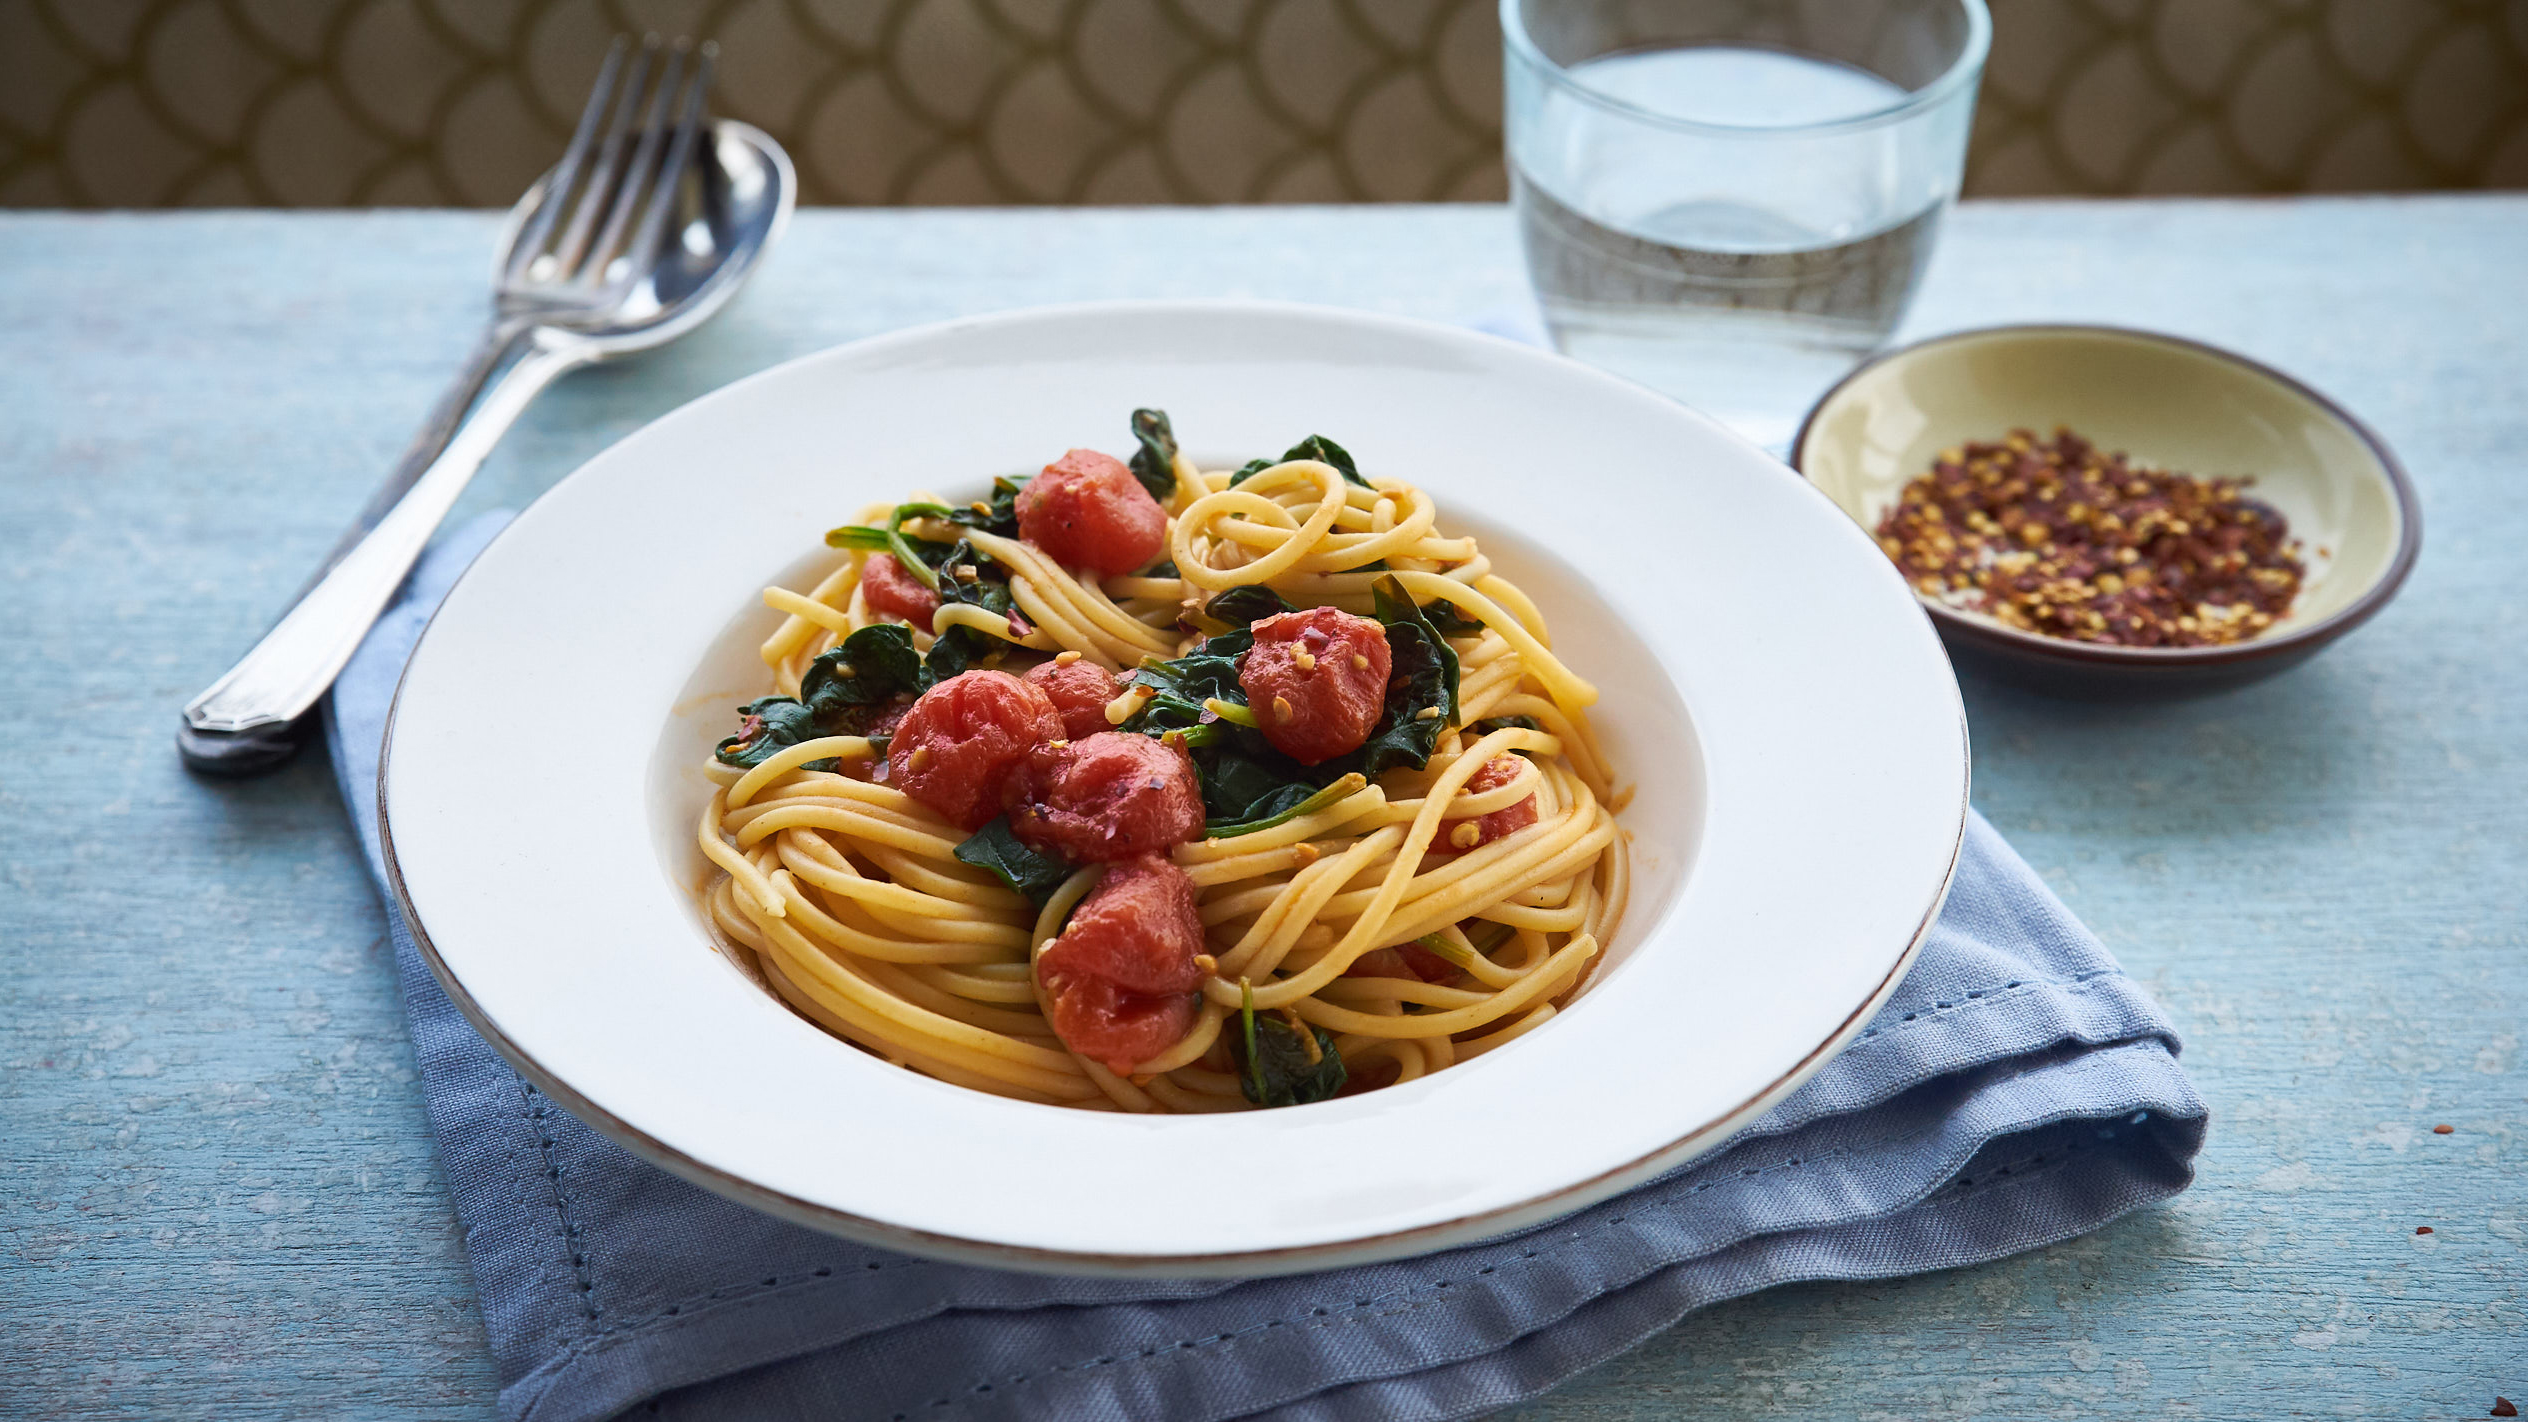 Spaghetti all'arrabbiata recipe - BBC Food